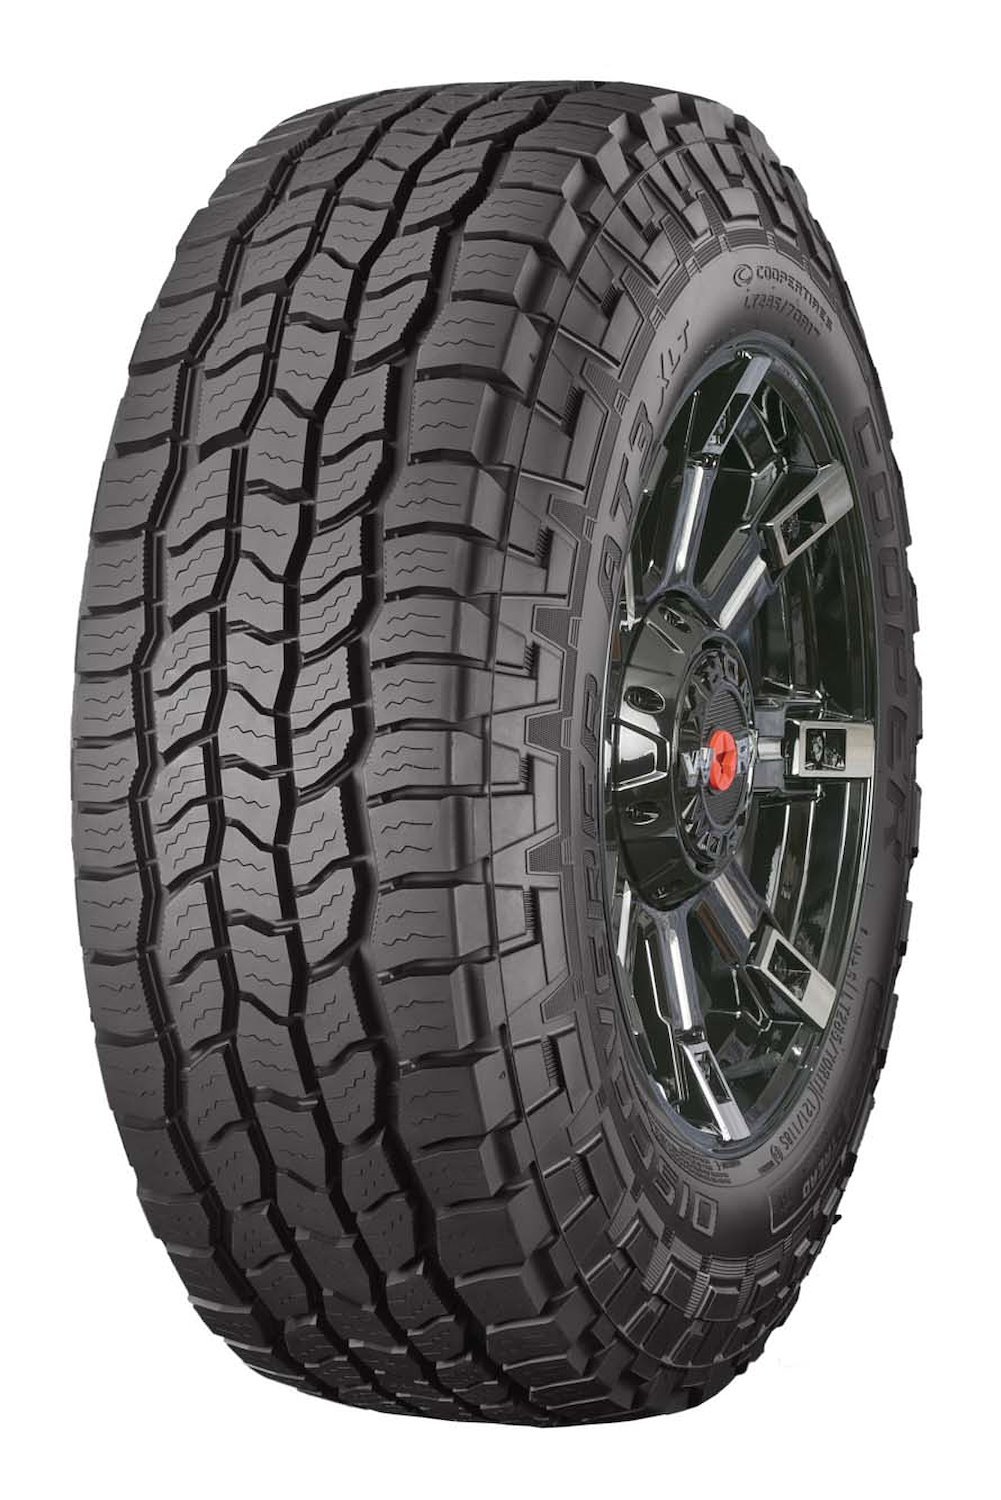 Discoverer AT3 XLT All-Terrain Tire, 32X11.50R15LT